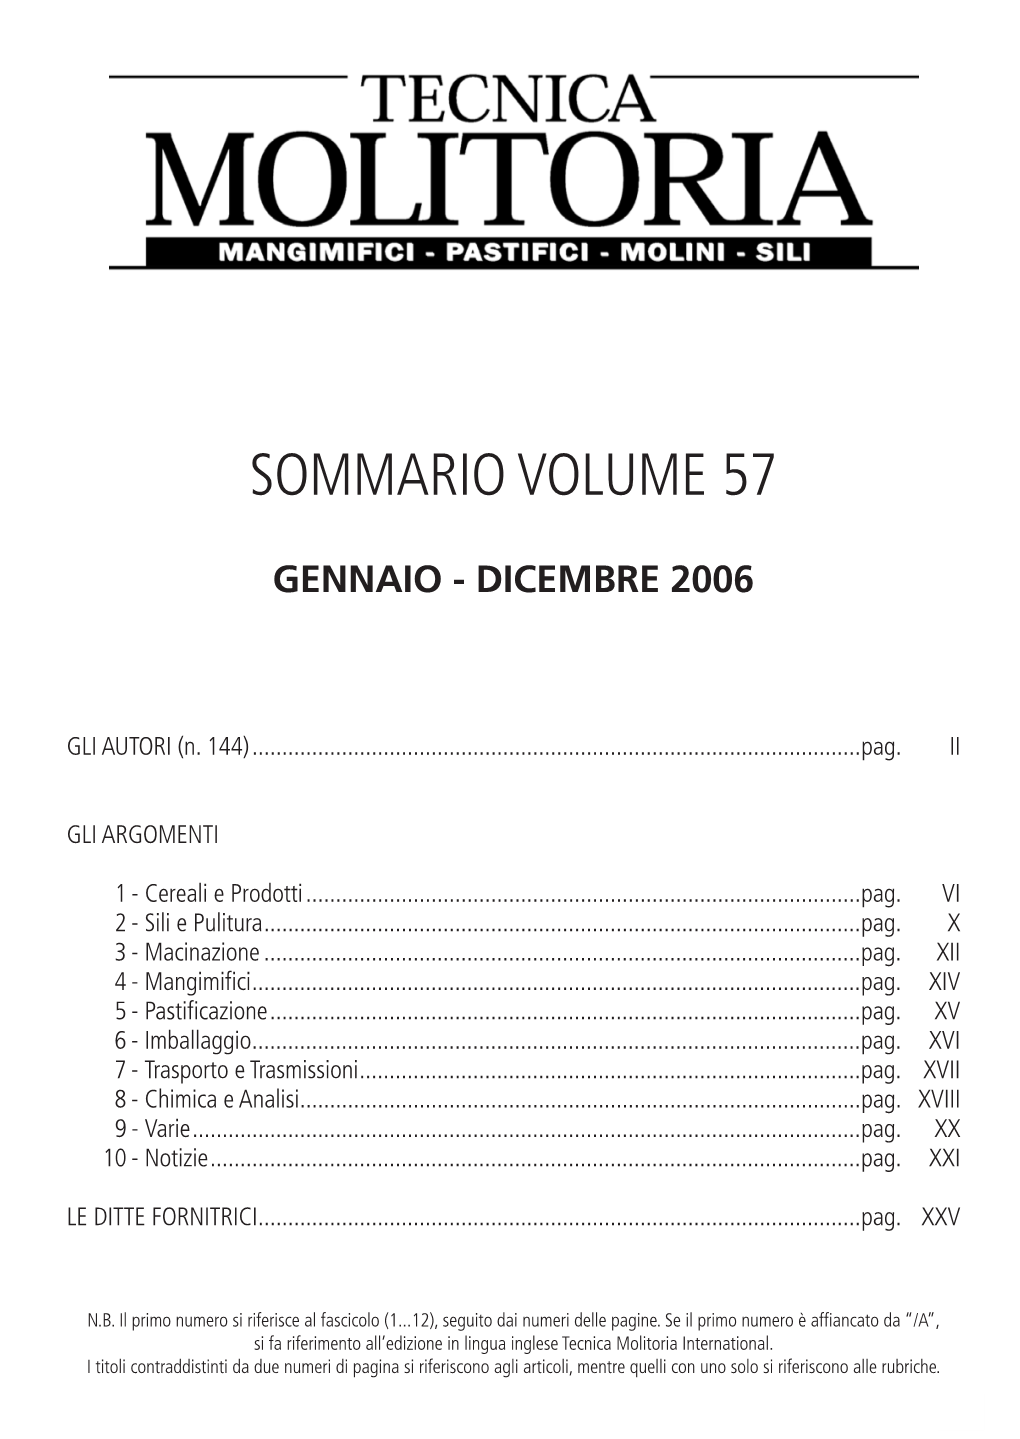 Sommario Volume 57